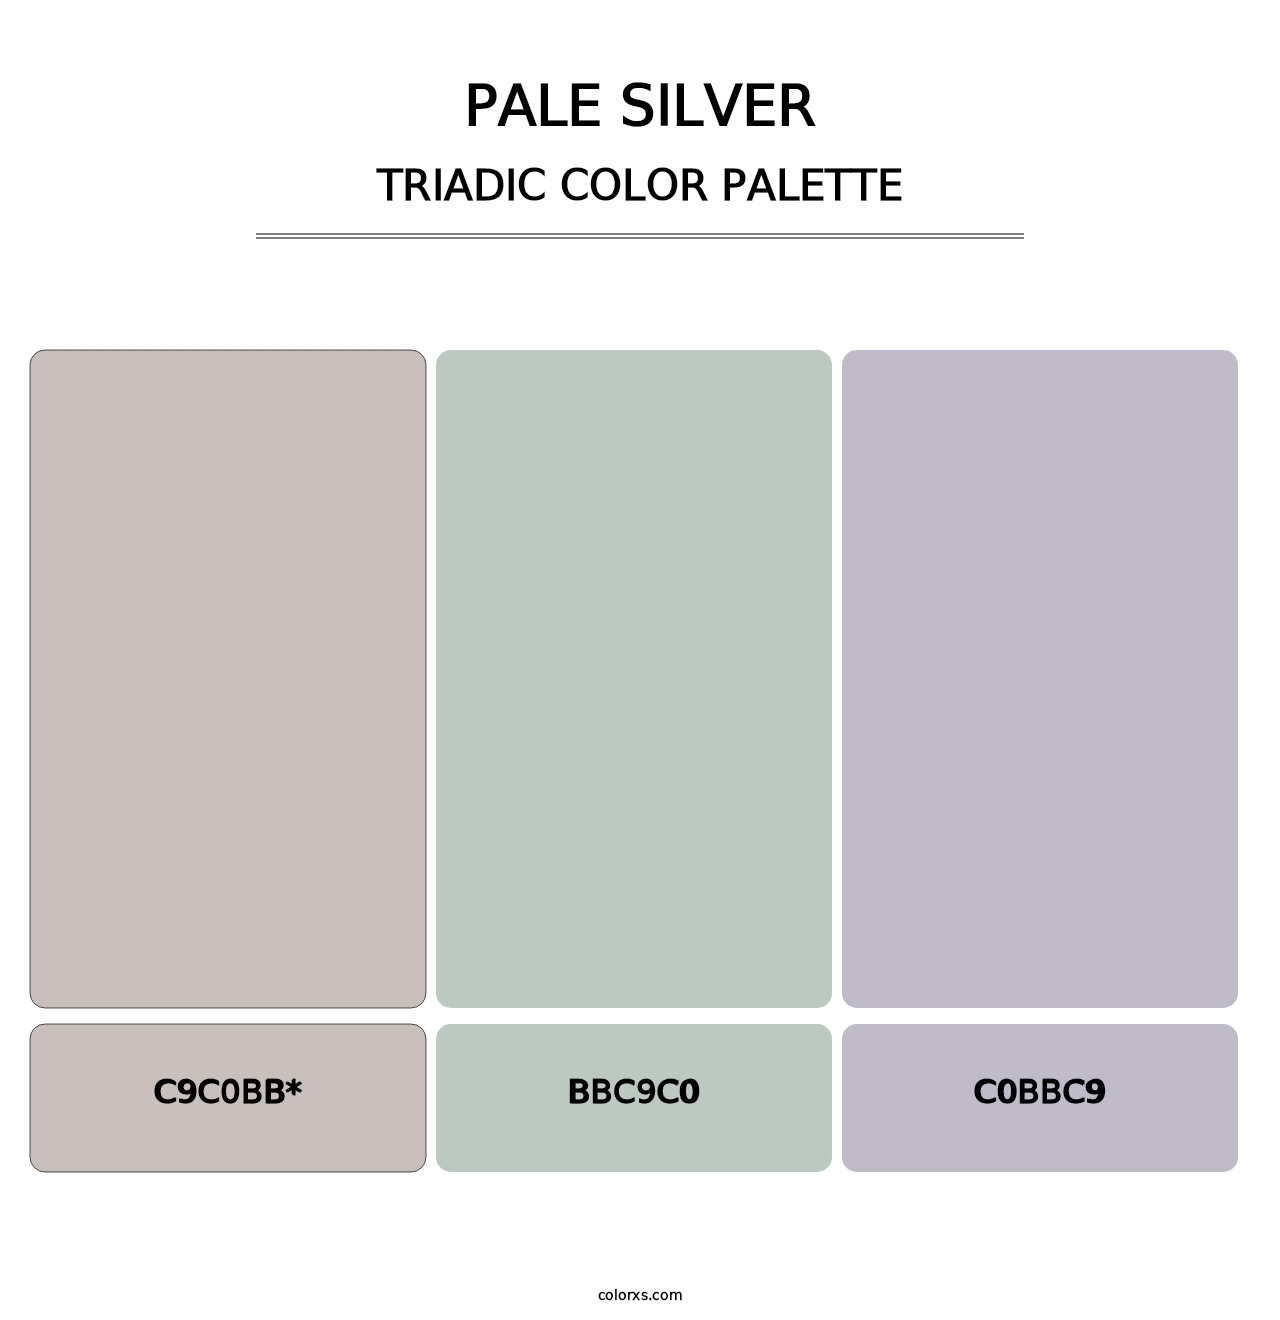 Pale Silver - Triadic Color Palette